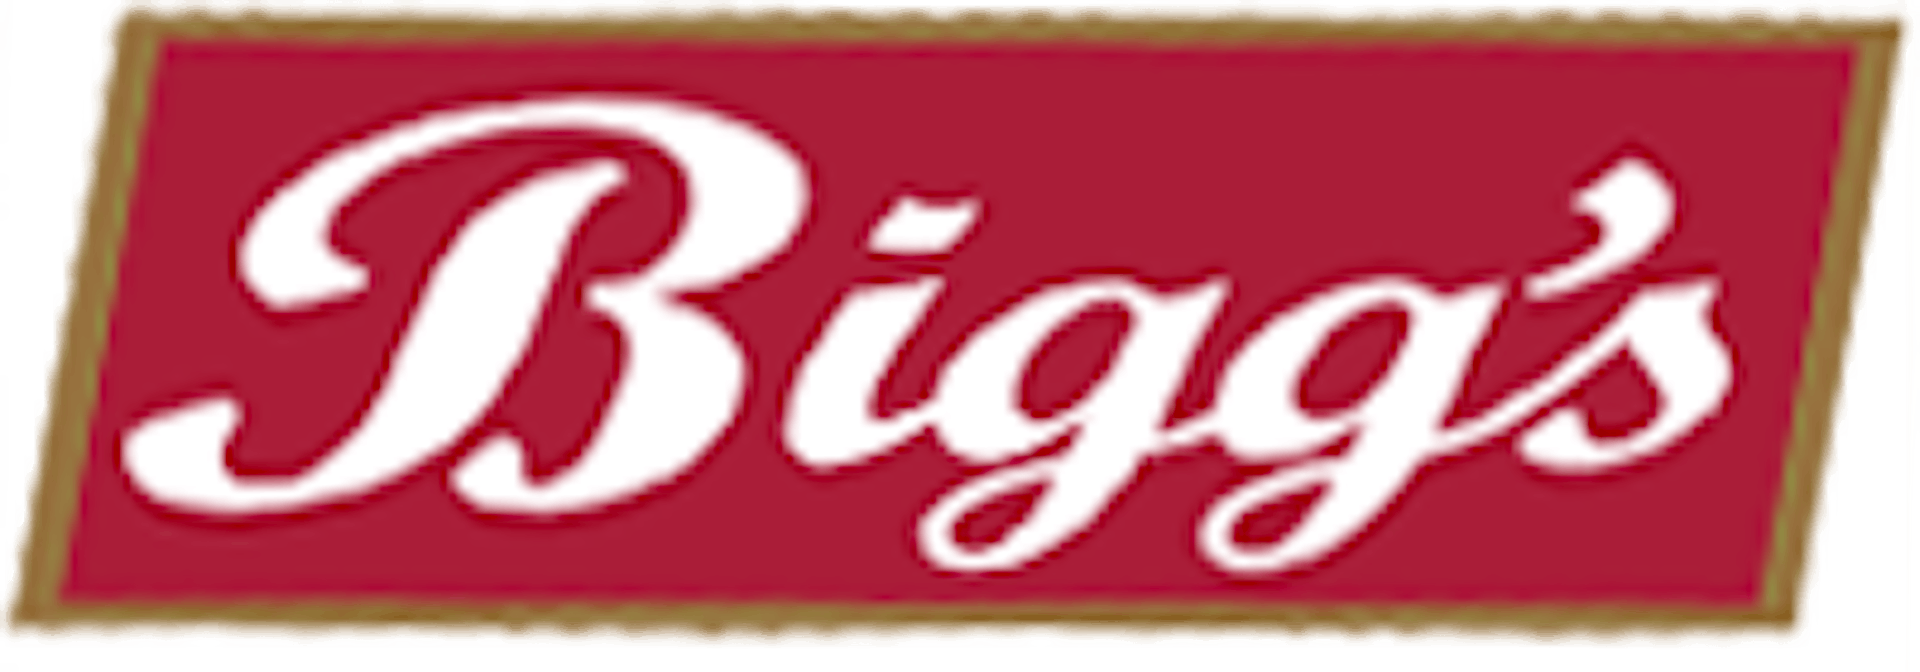 Burgers By Biggs